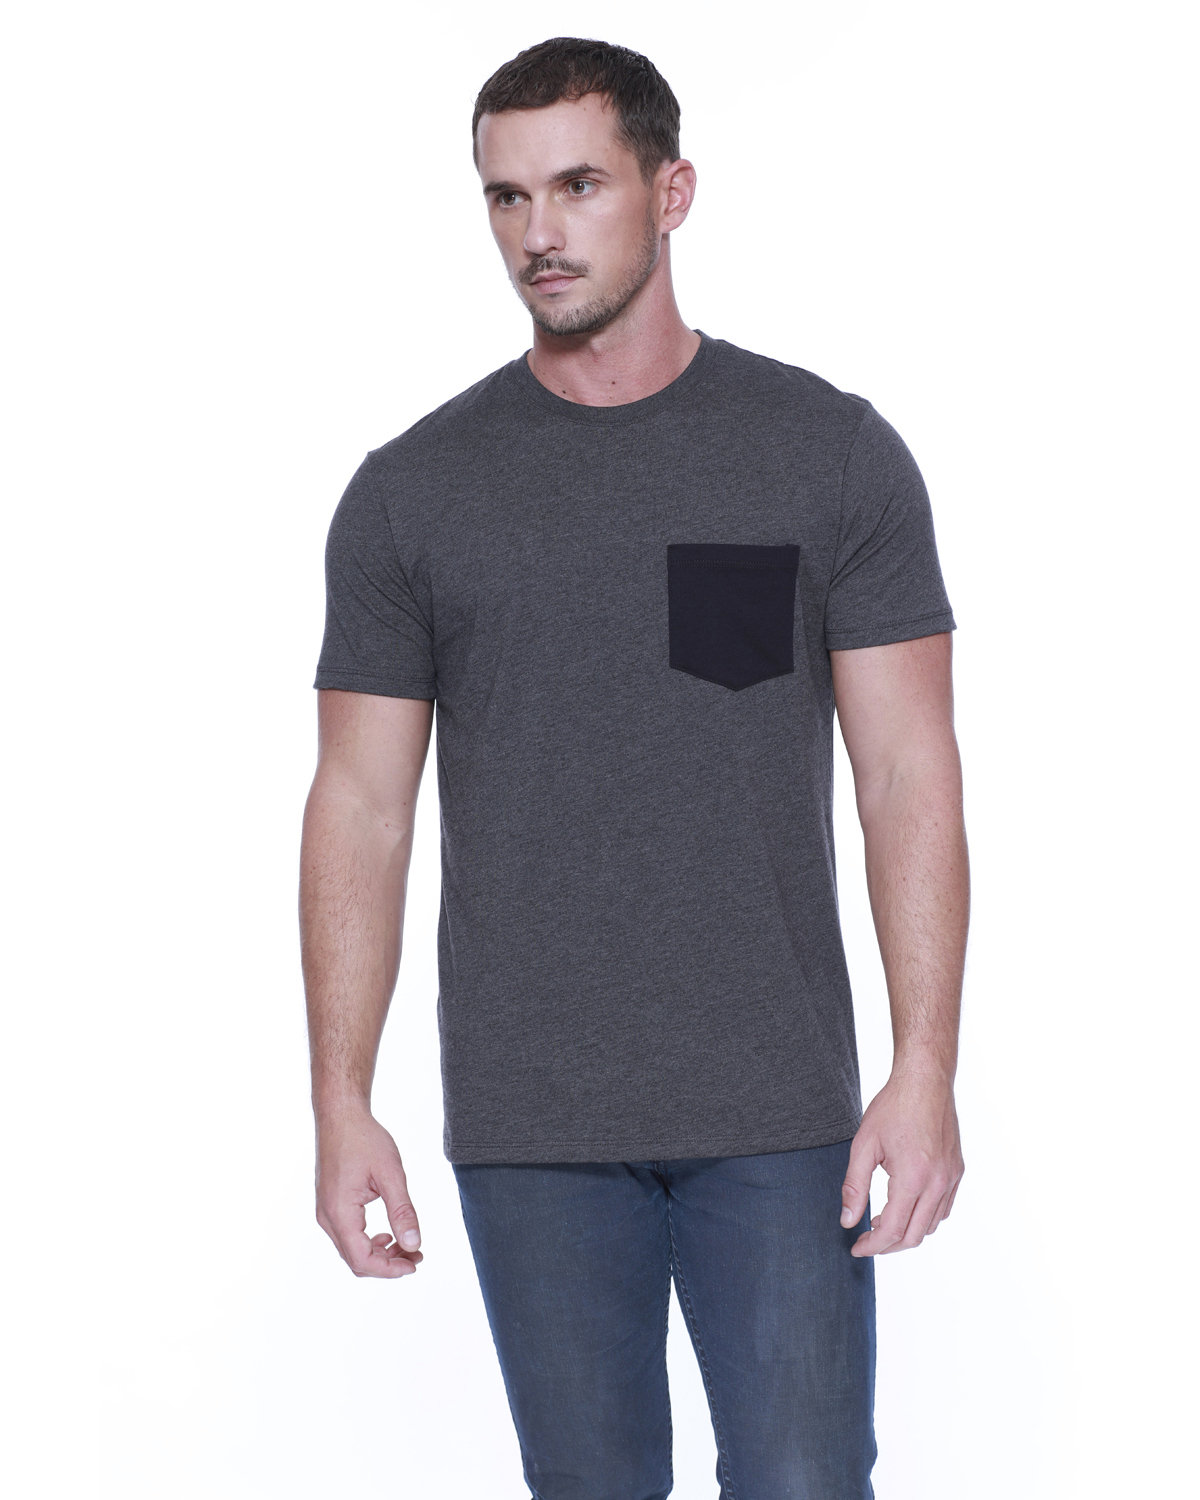 StarTee Men's CVC Pocket T-Shirt CHARCL HTHR/ BLK 